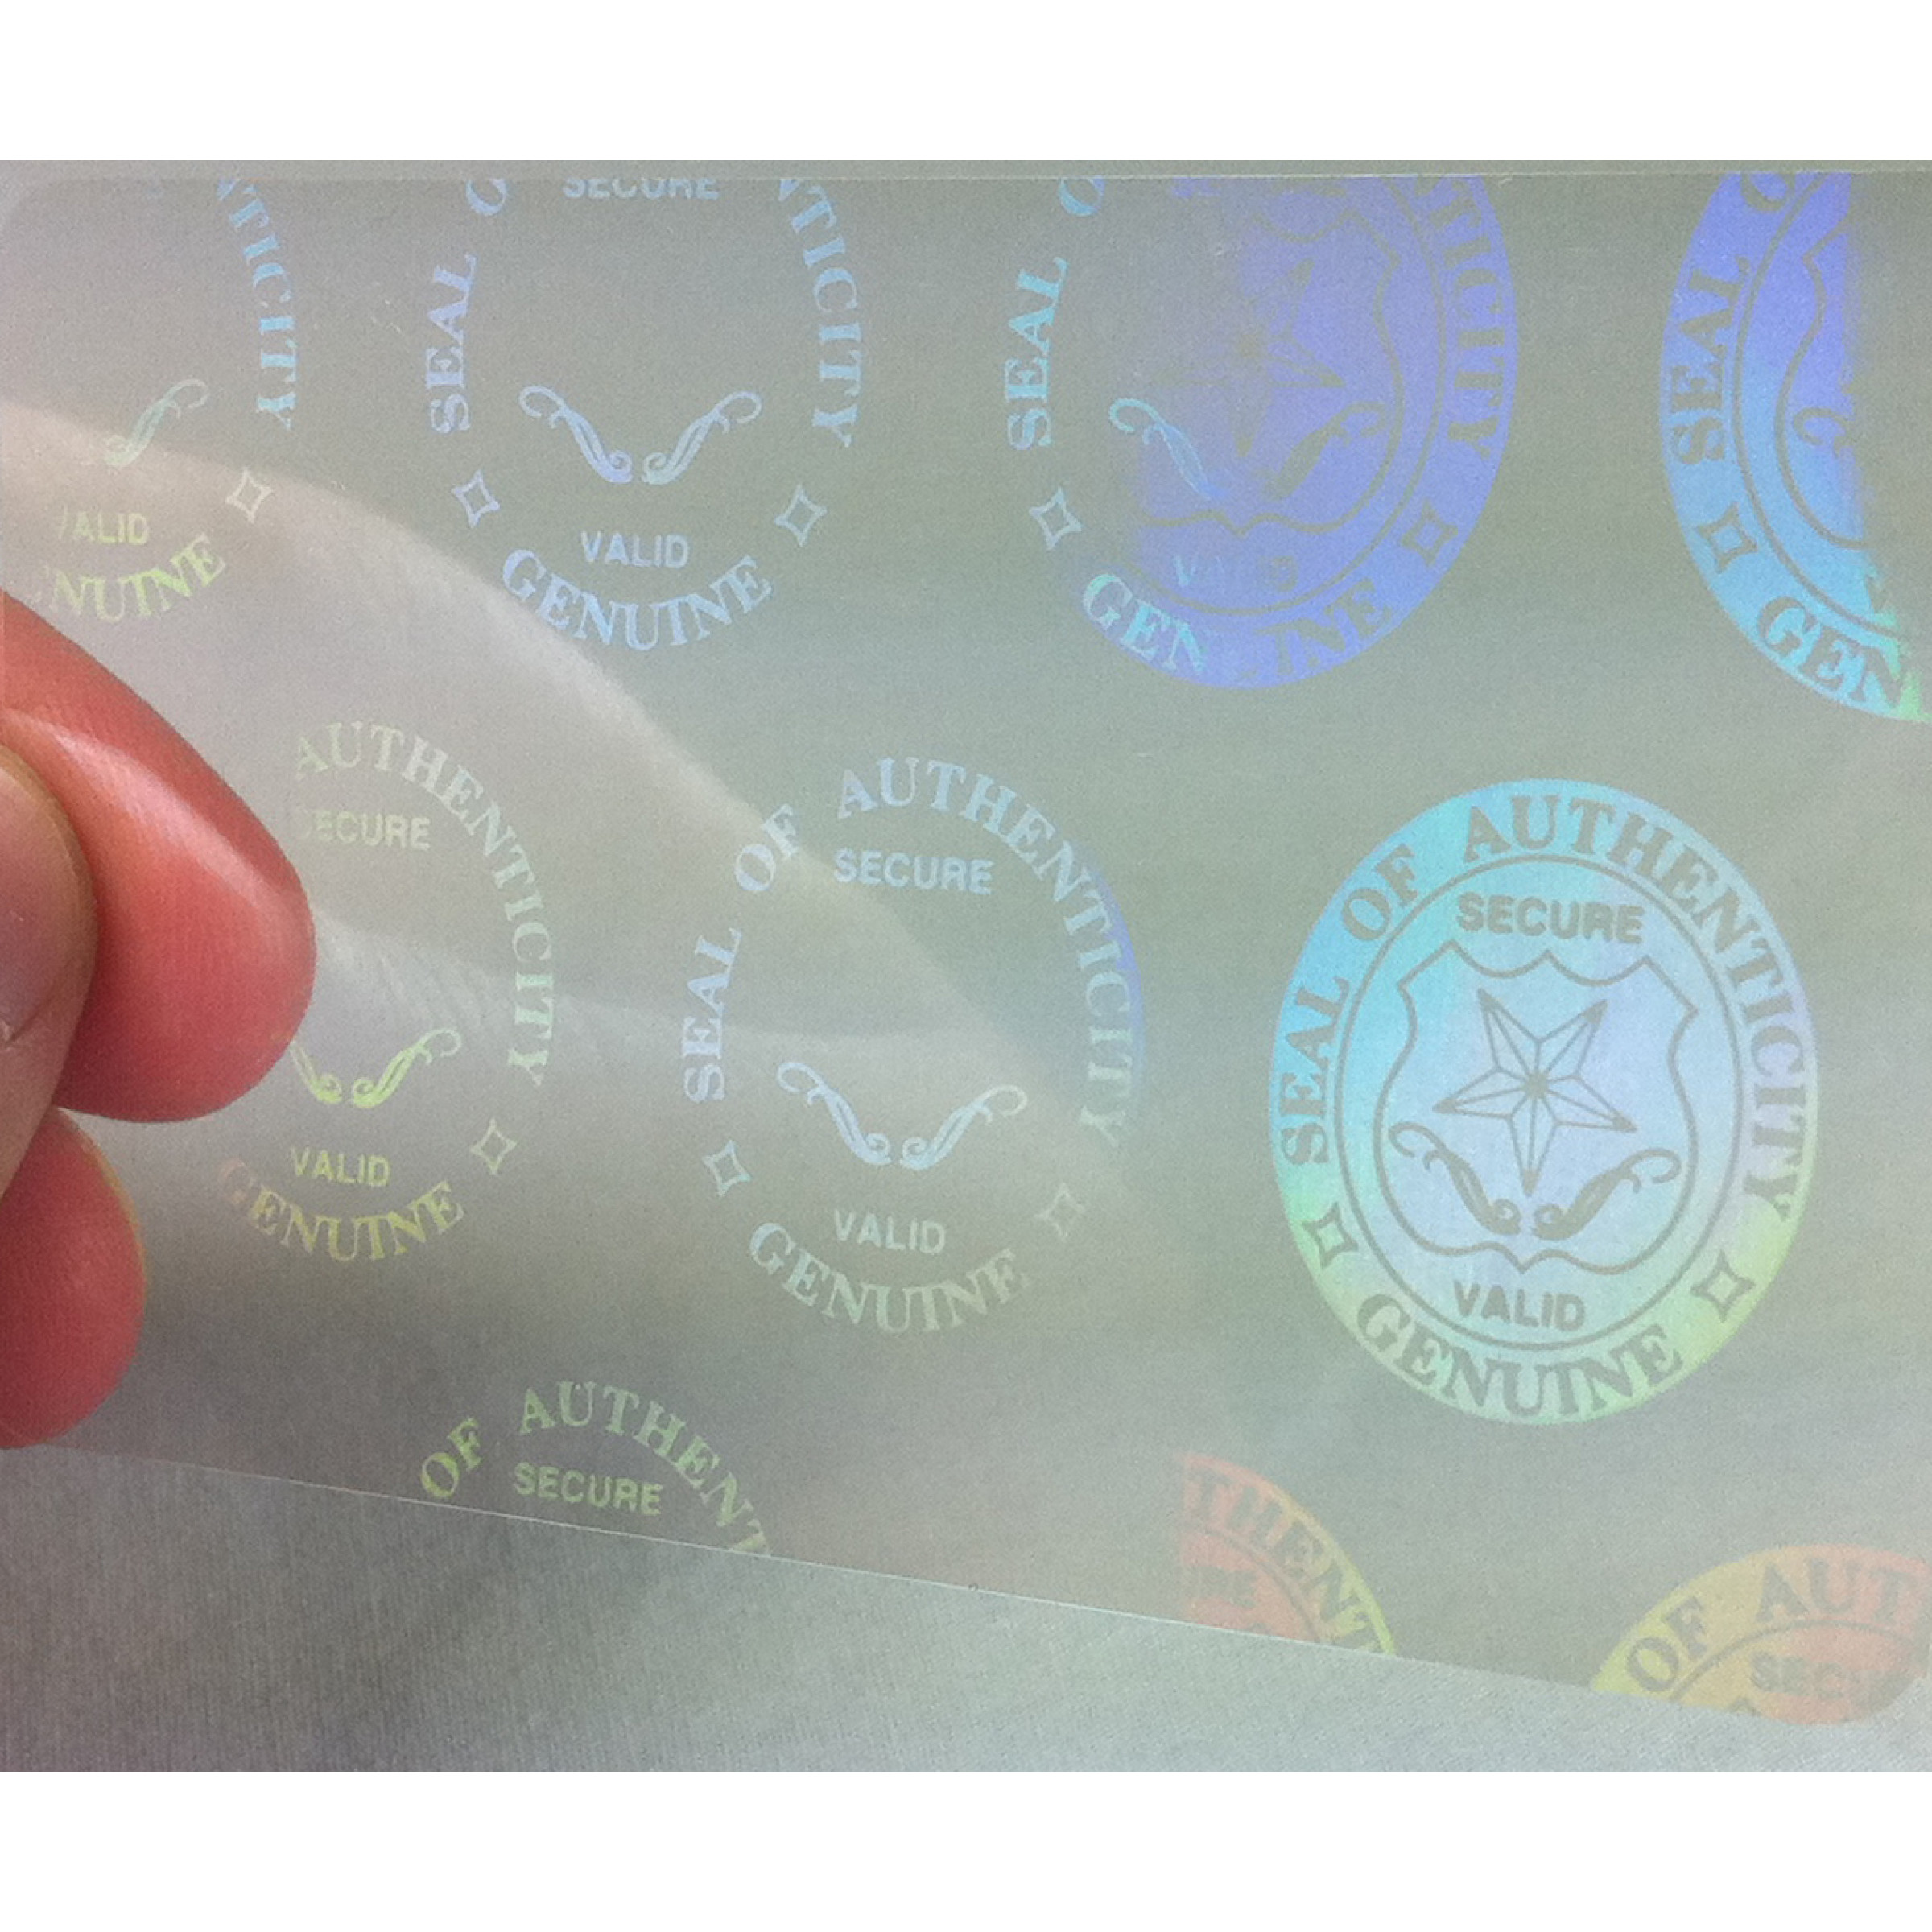 Lot of 5 Hologram Overlays Presidential Inkjet Teslin ID Cards 